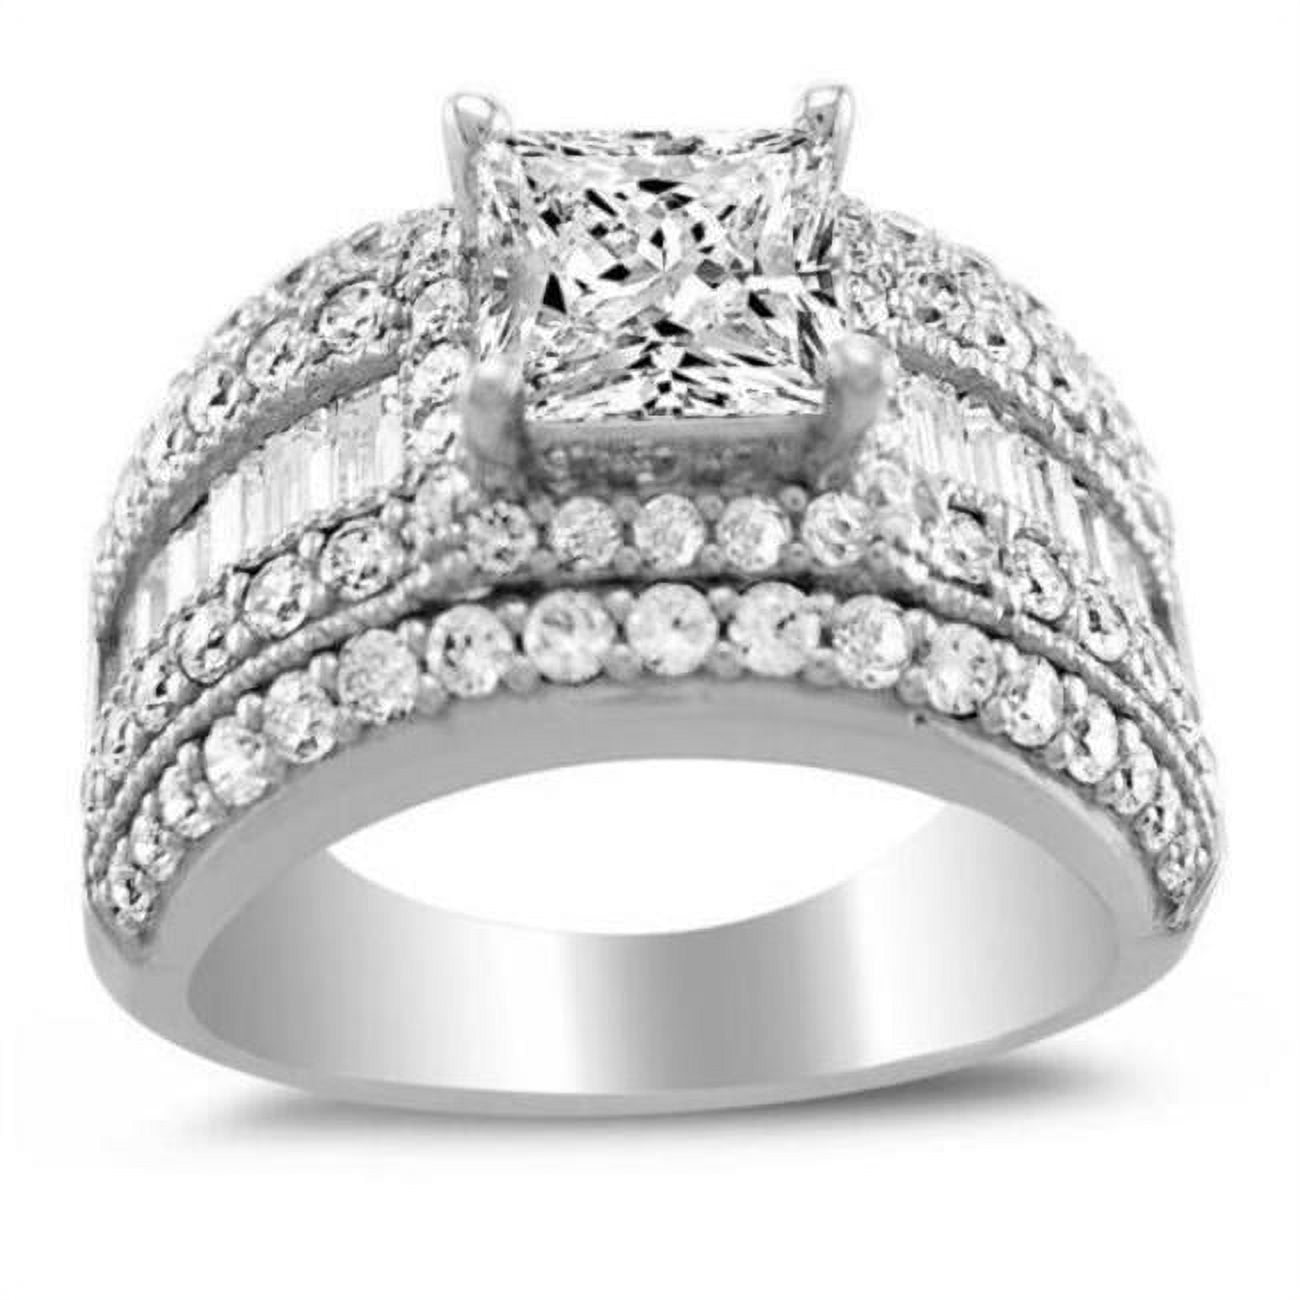 OS0065-RG-sz7.5 14K White Gold 2.5CT TGW Princess-cut Diamonette Engagement Ring, Size 7.5 -  Precious Stars, OS0065-RG_sz7.5